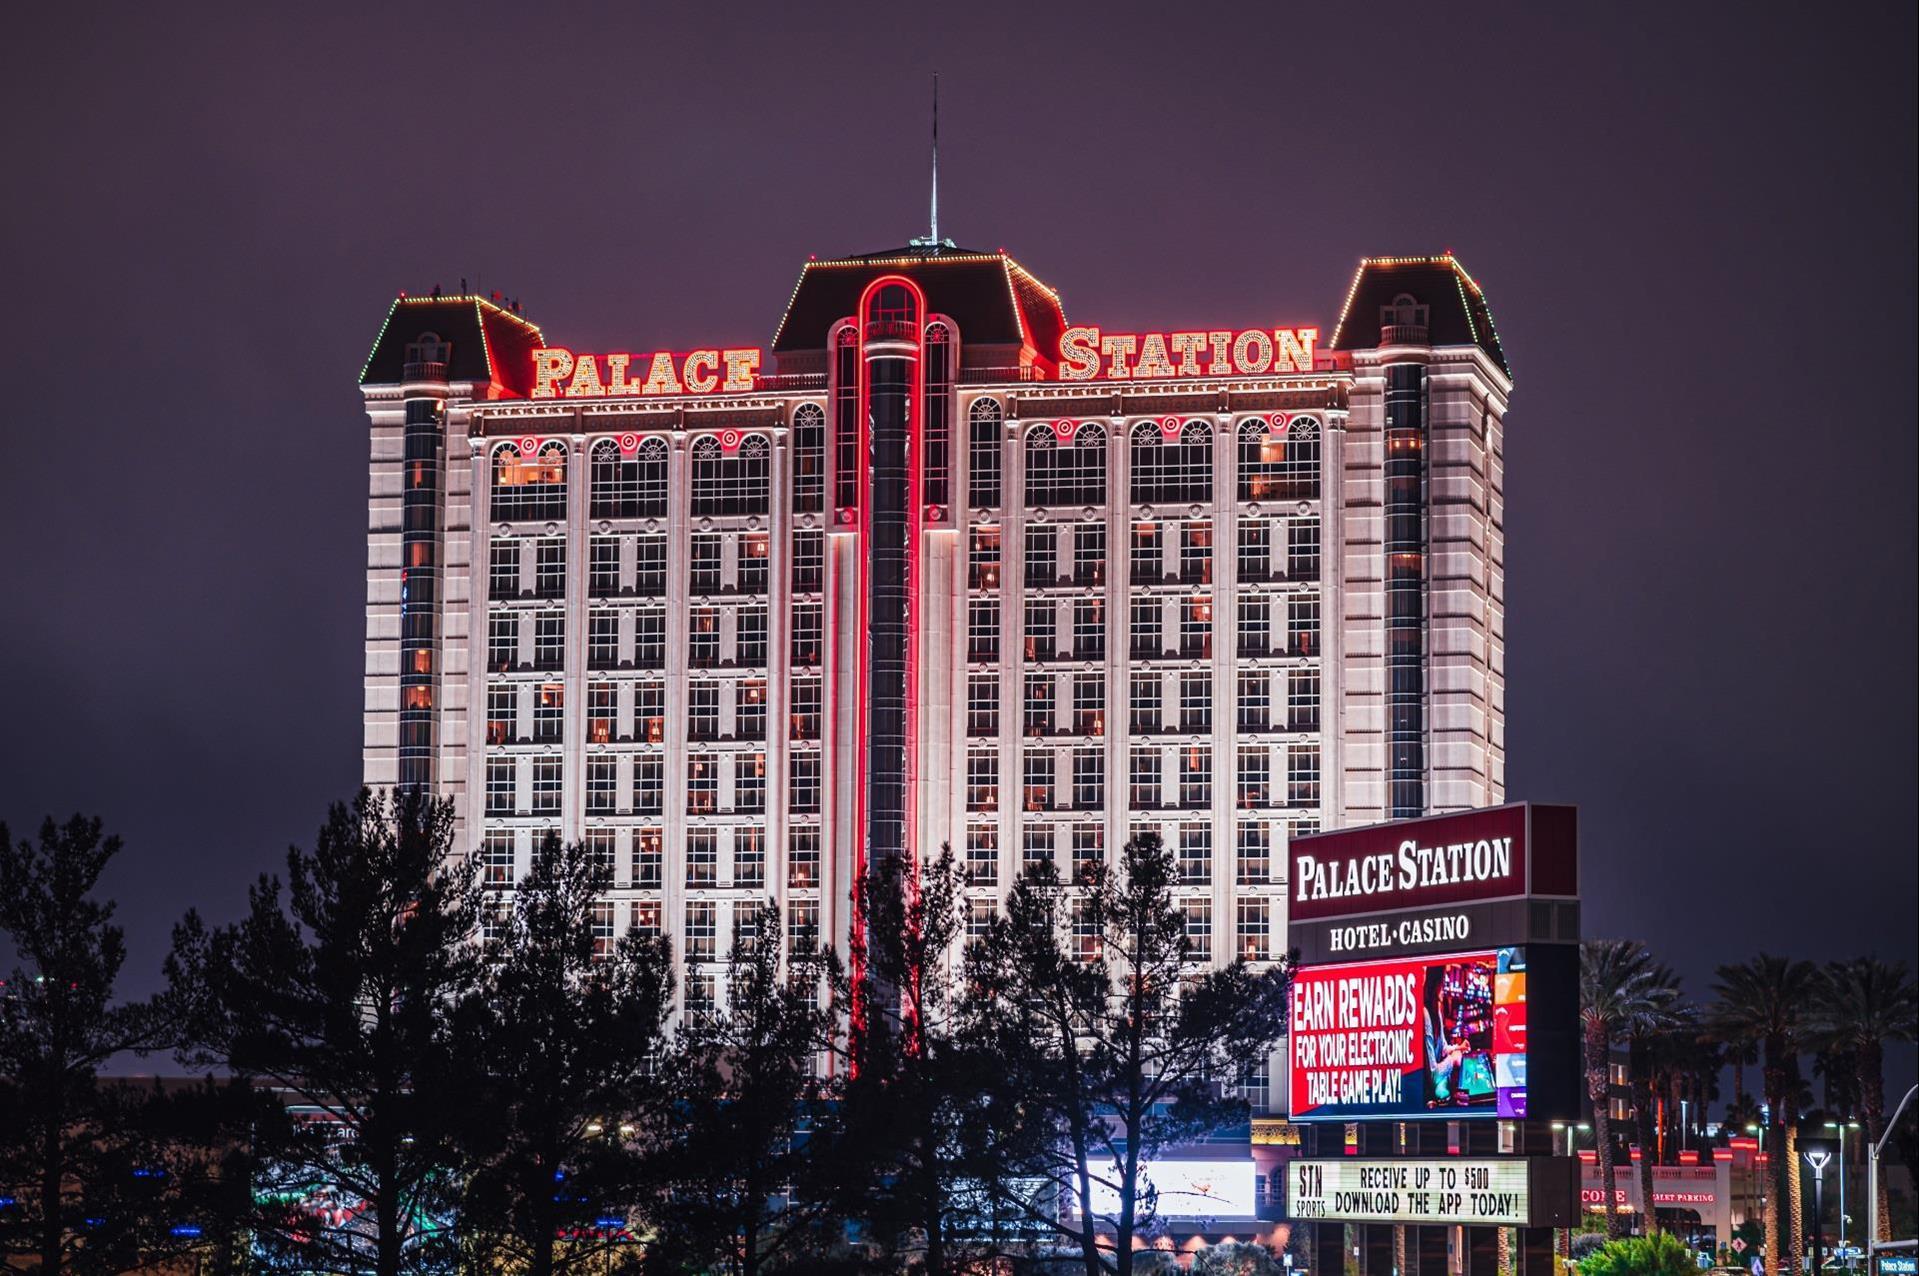 Palace Station Hotel & Casino in Las Vegas, NV